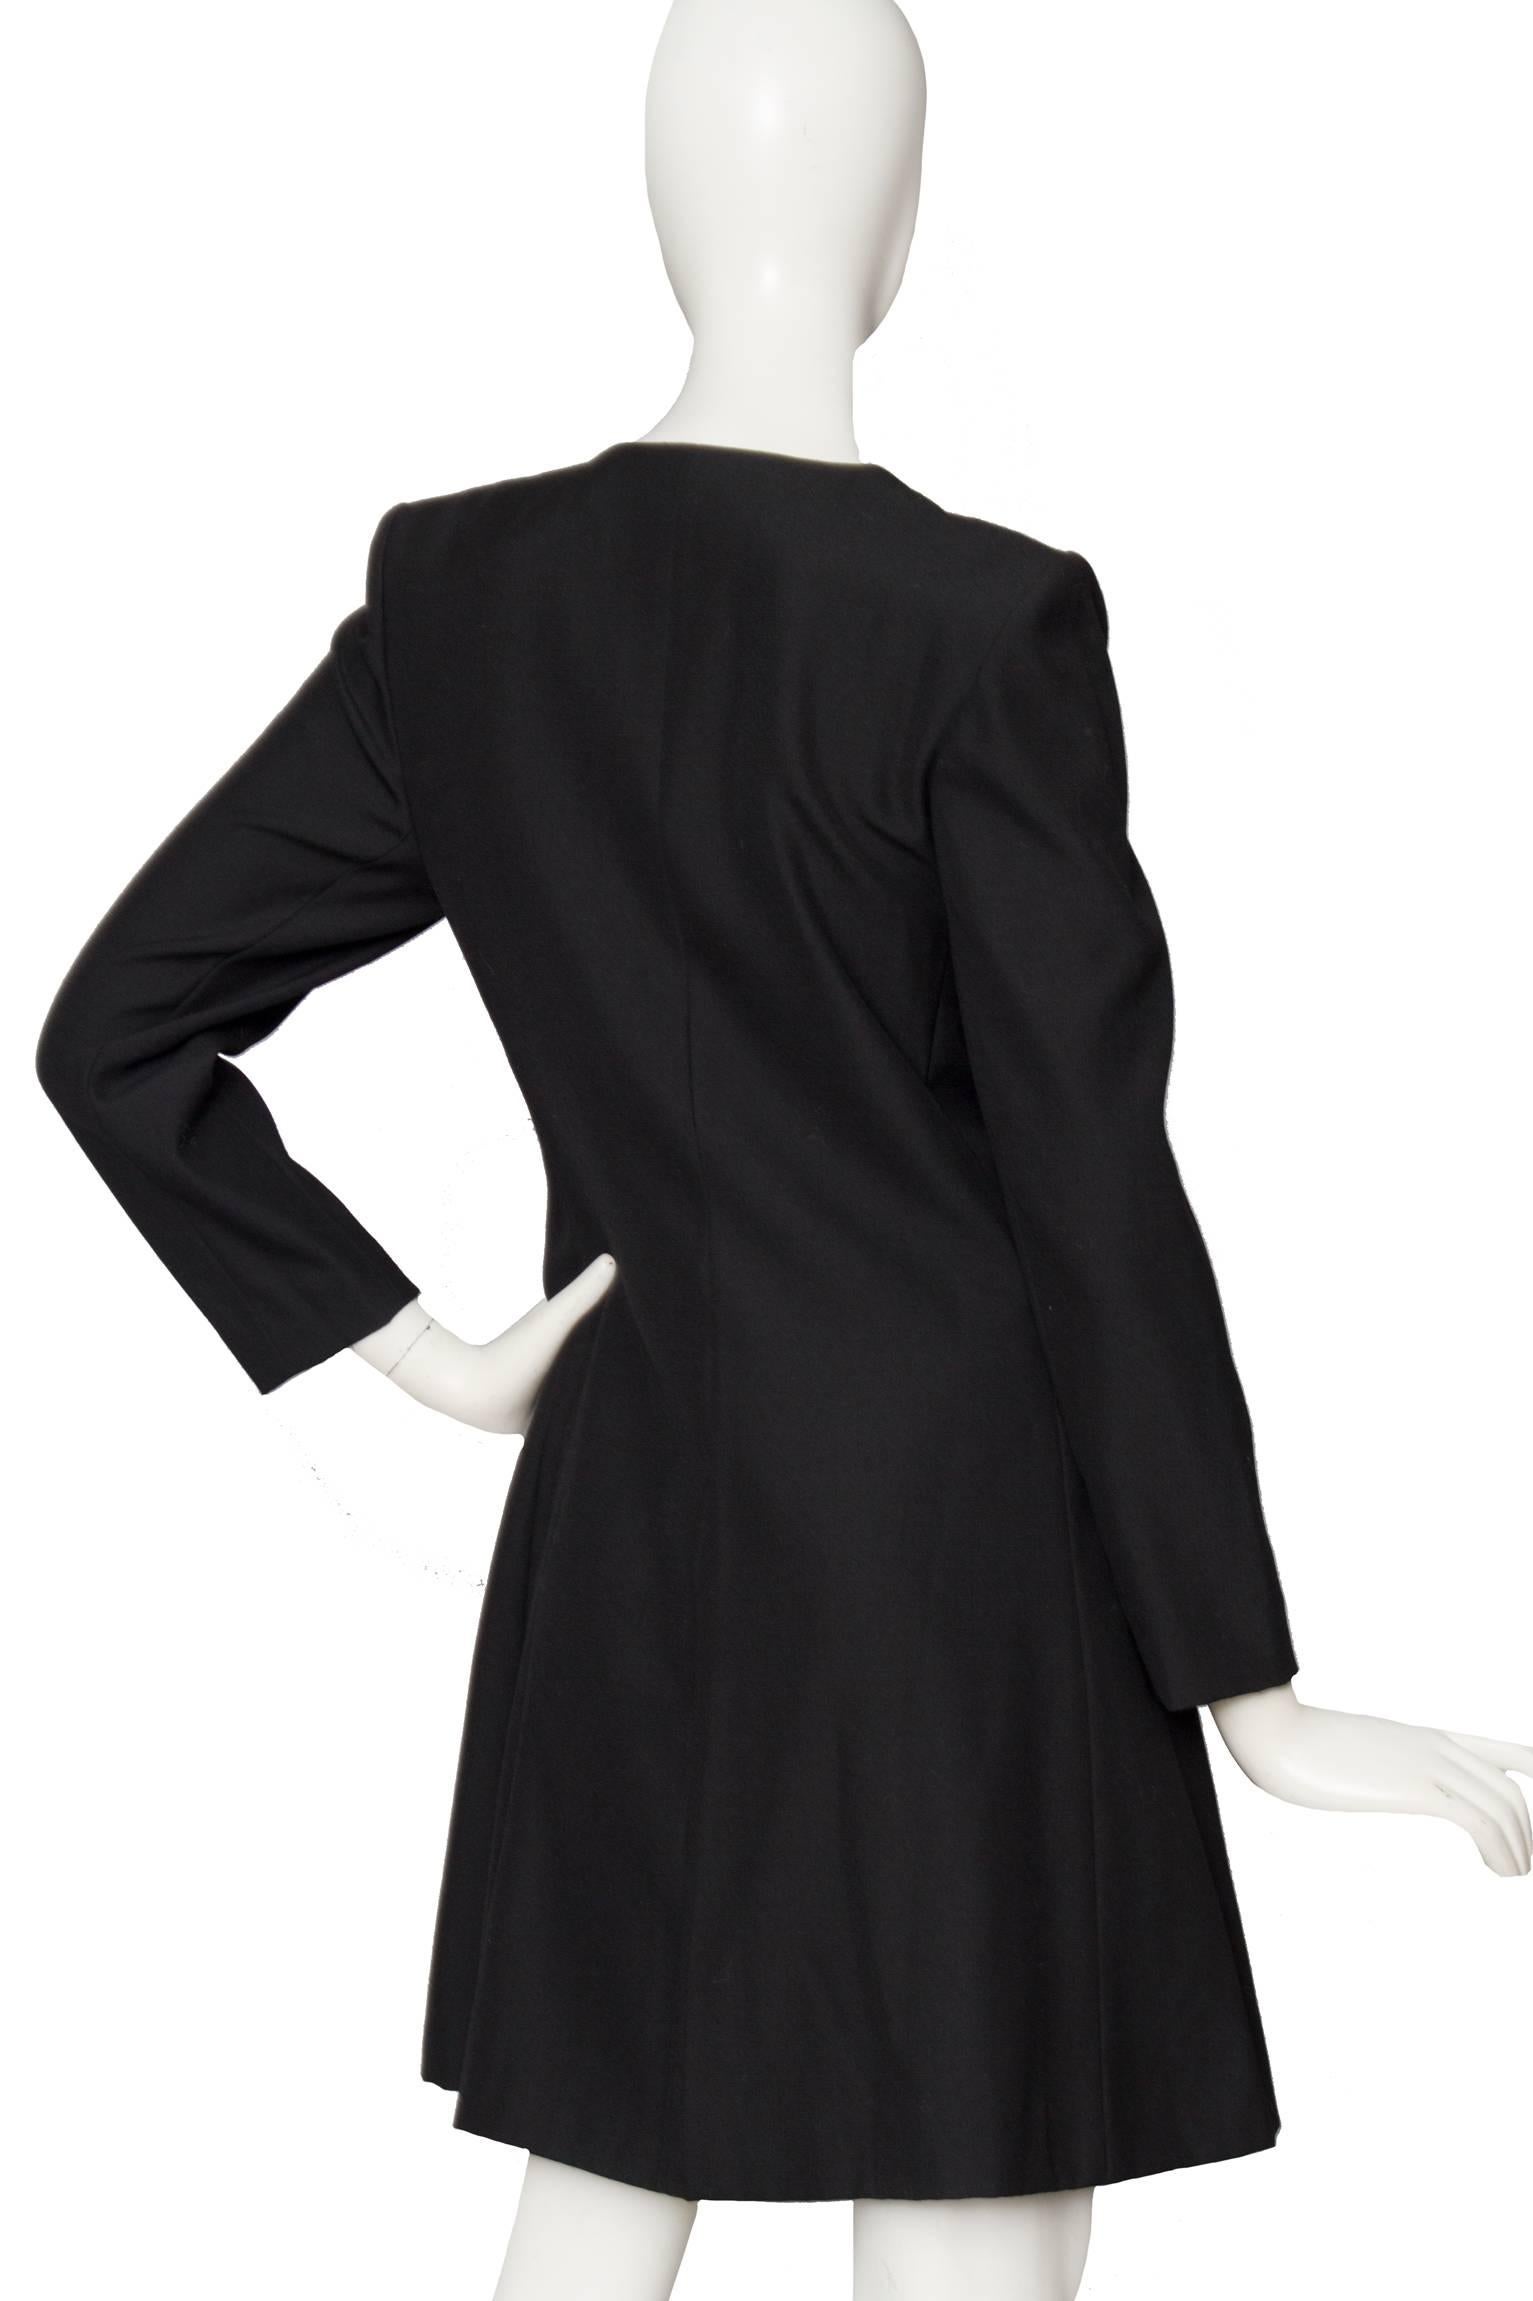  Black Yves Saint Laurent Wool Dress For Sale 1